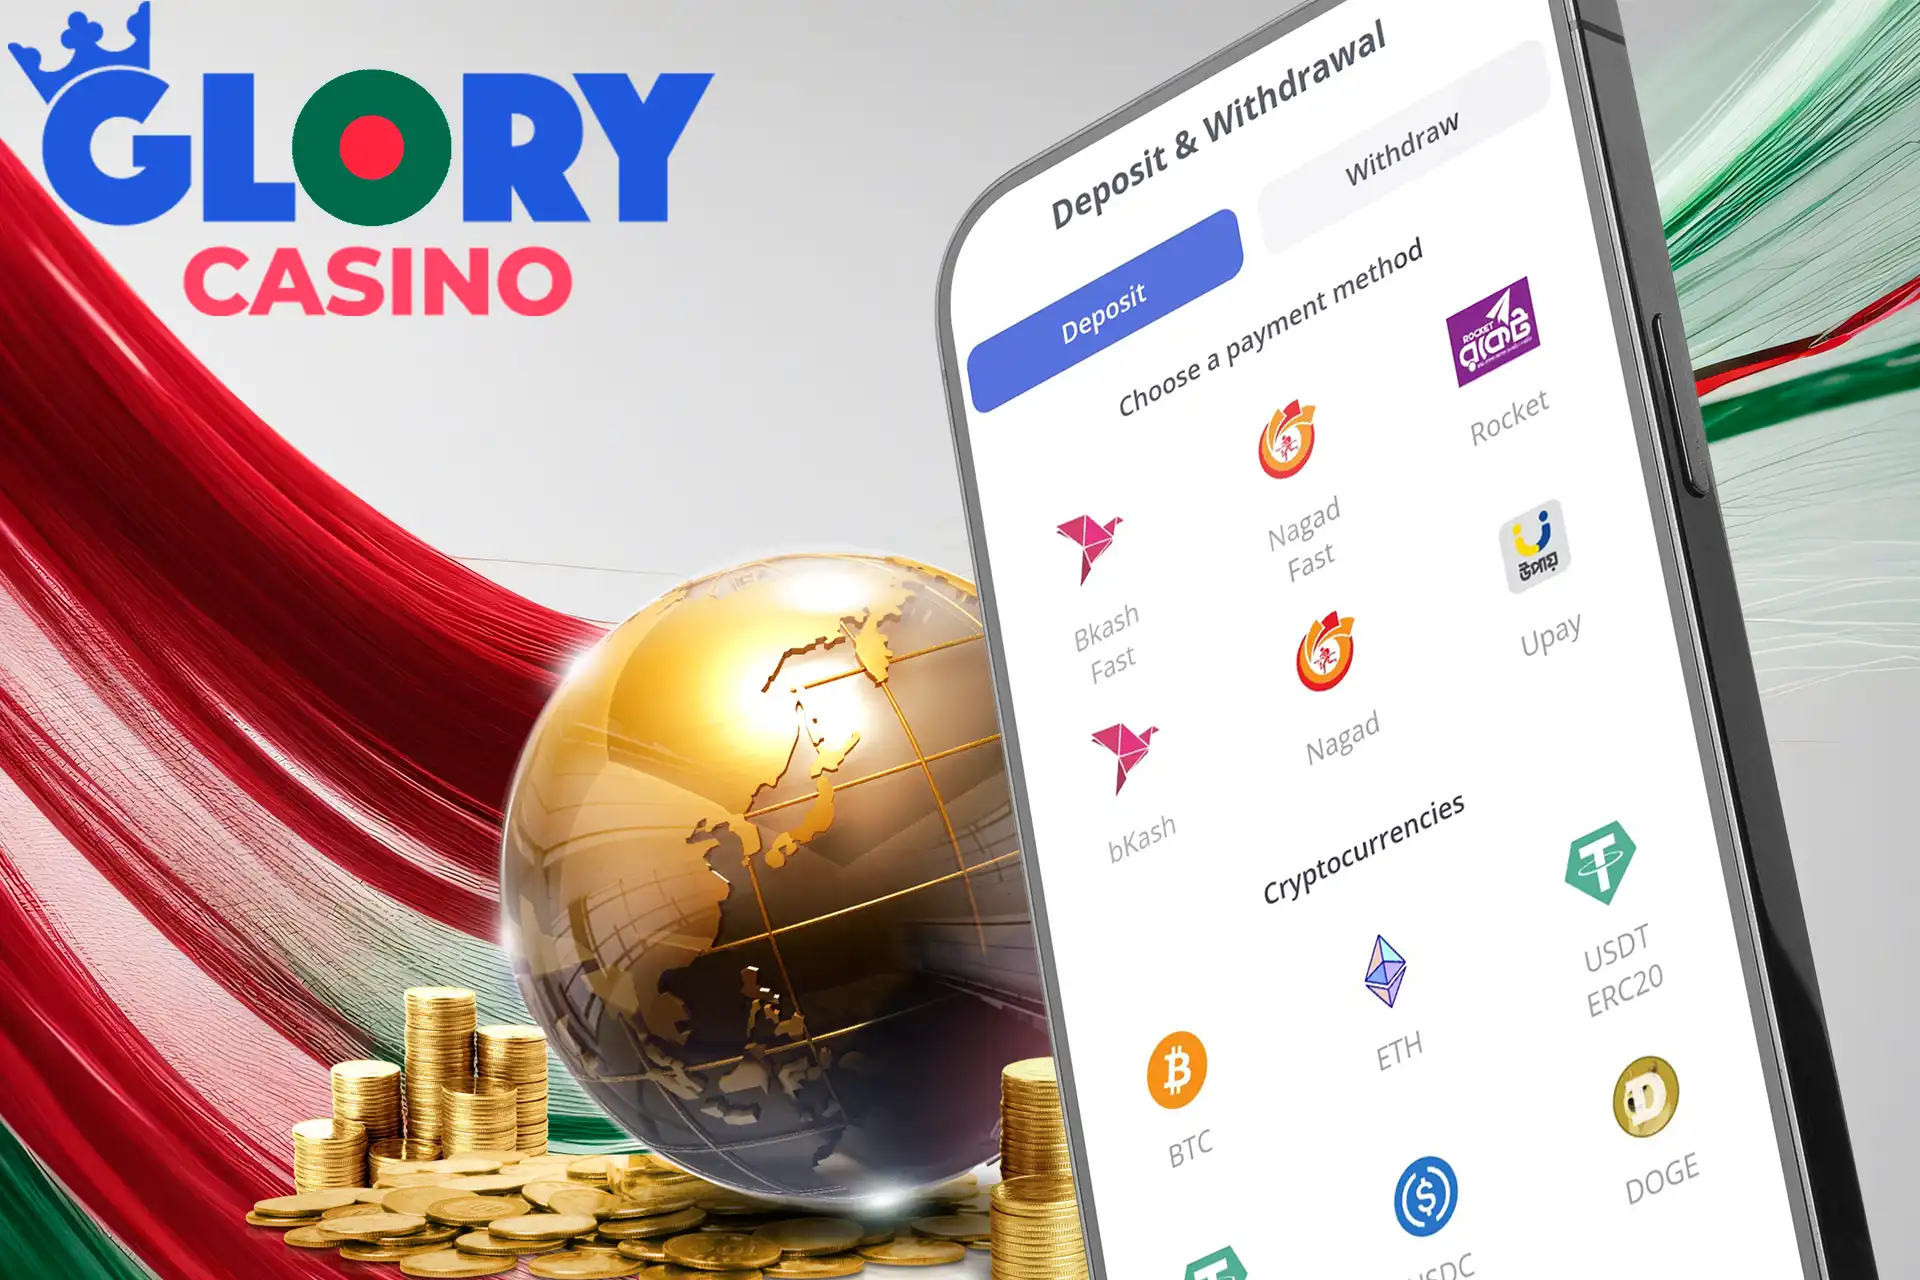 Many payment methods at Glory Casino Bangladesh